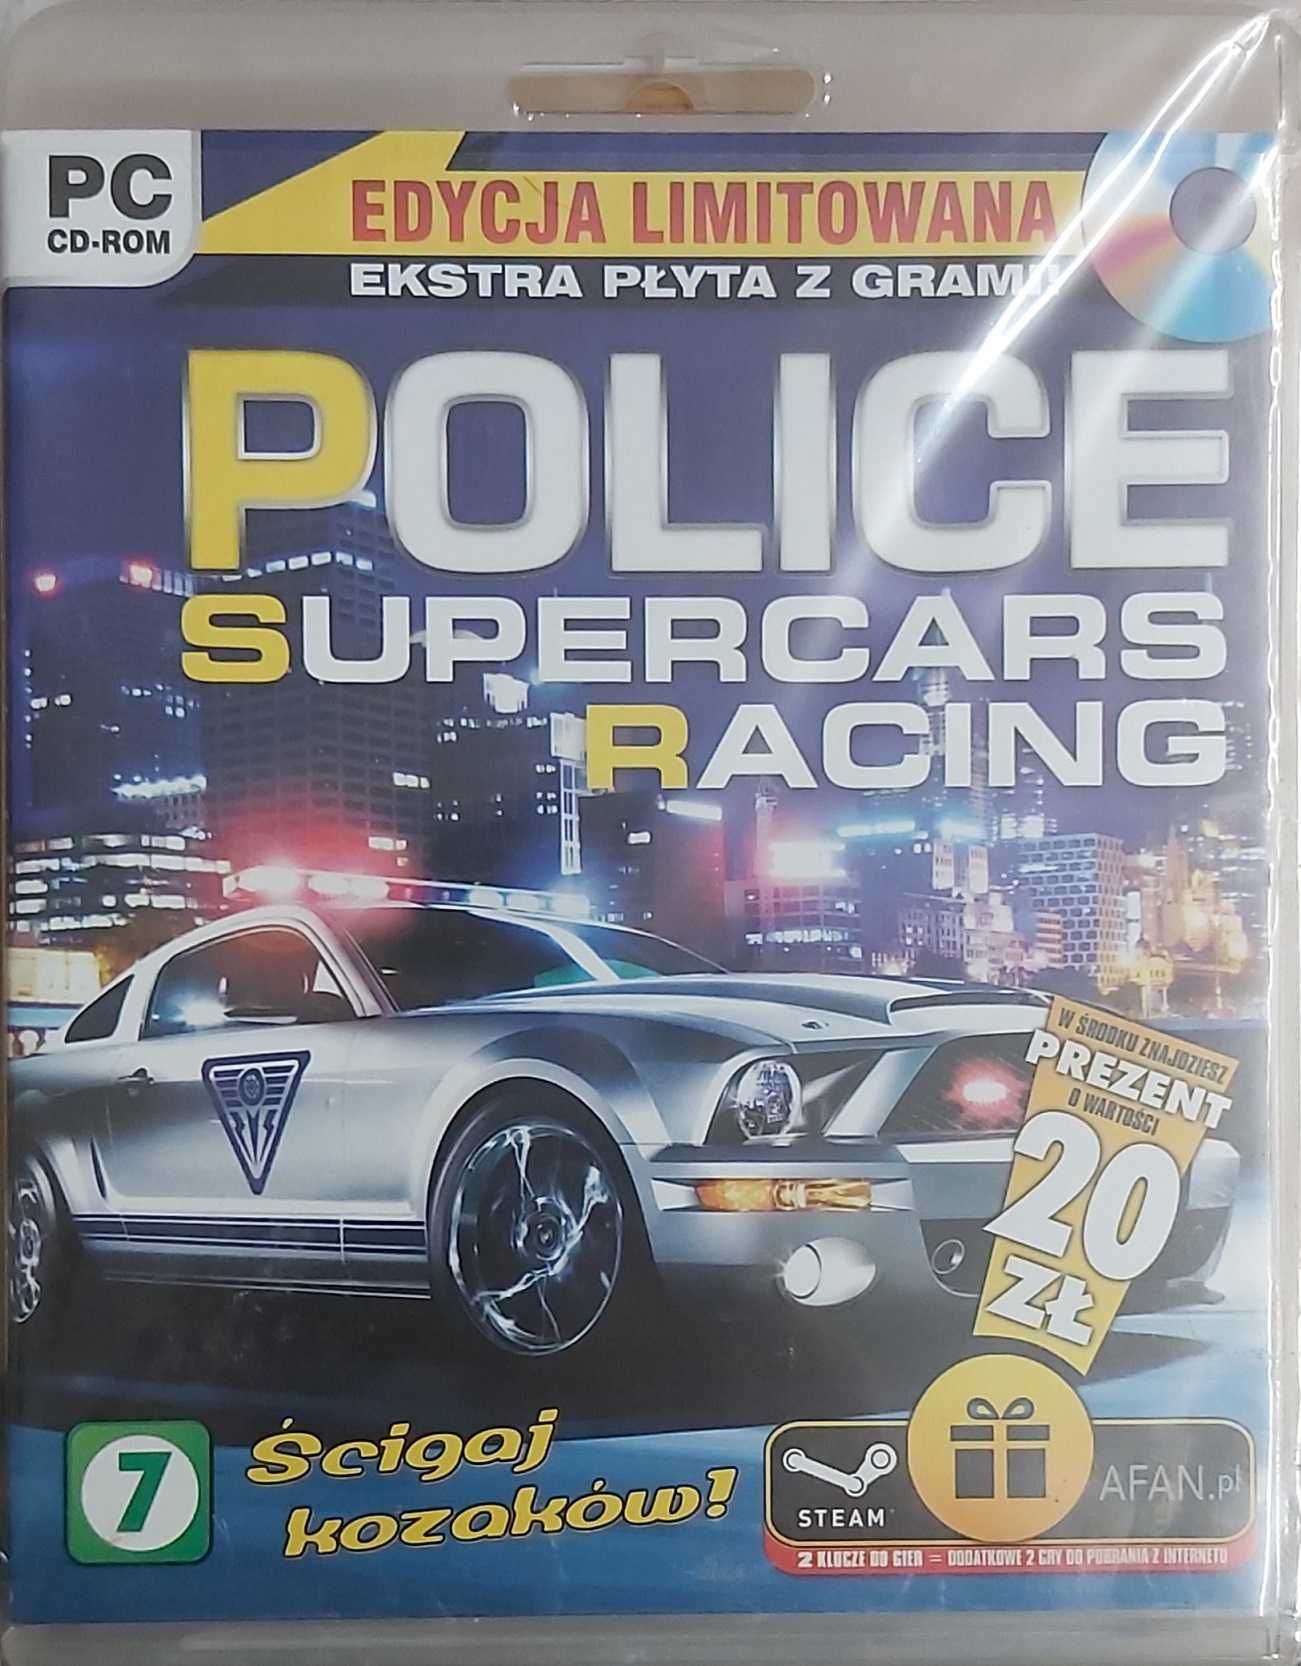 POLICE SuperCars Racing 20szt